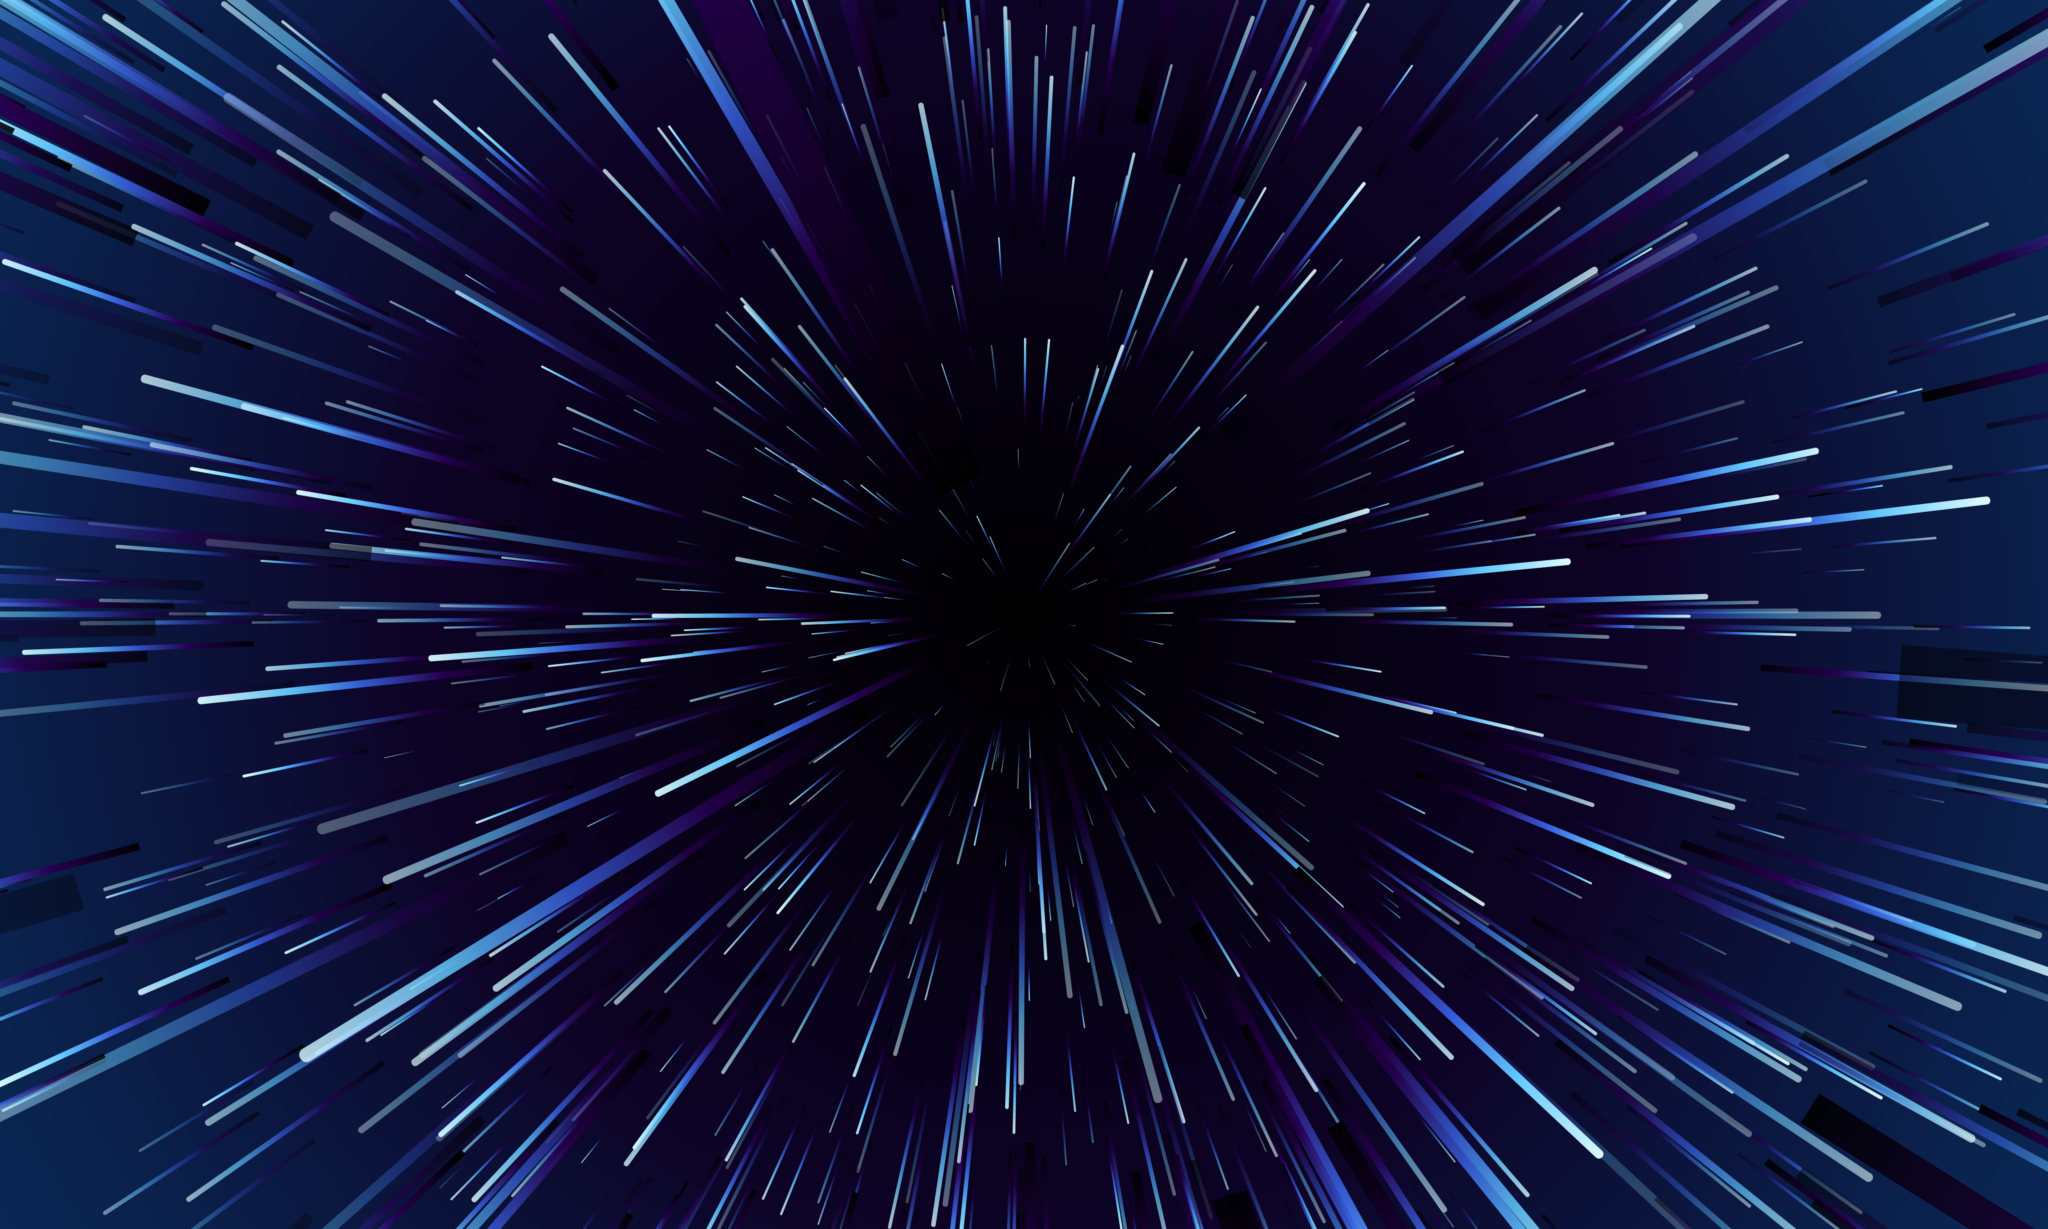 Image illustrating stars warping as you travel fast through space